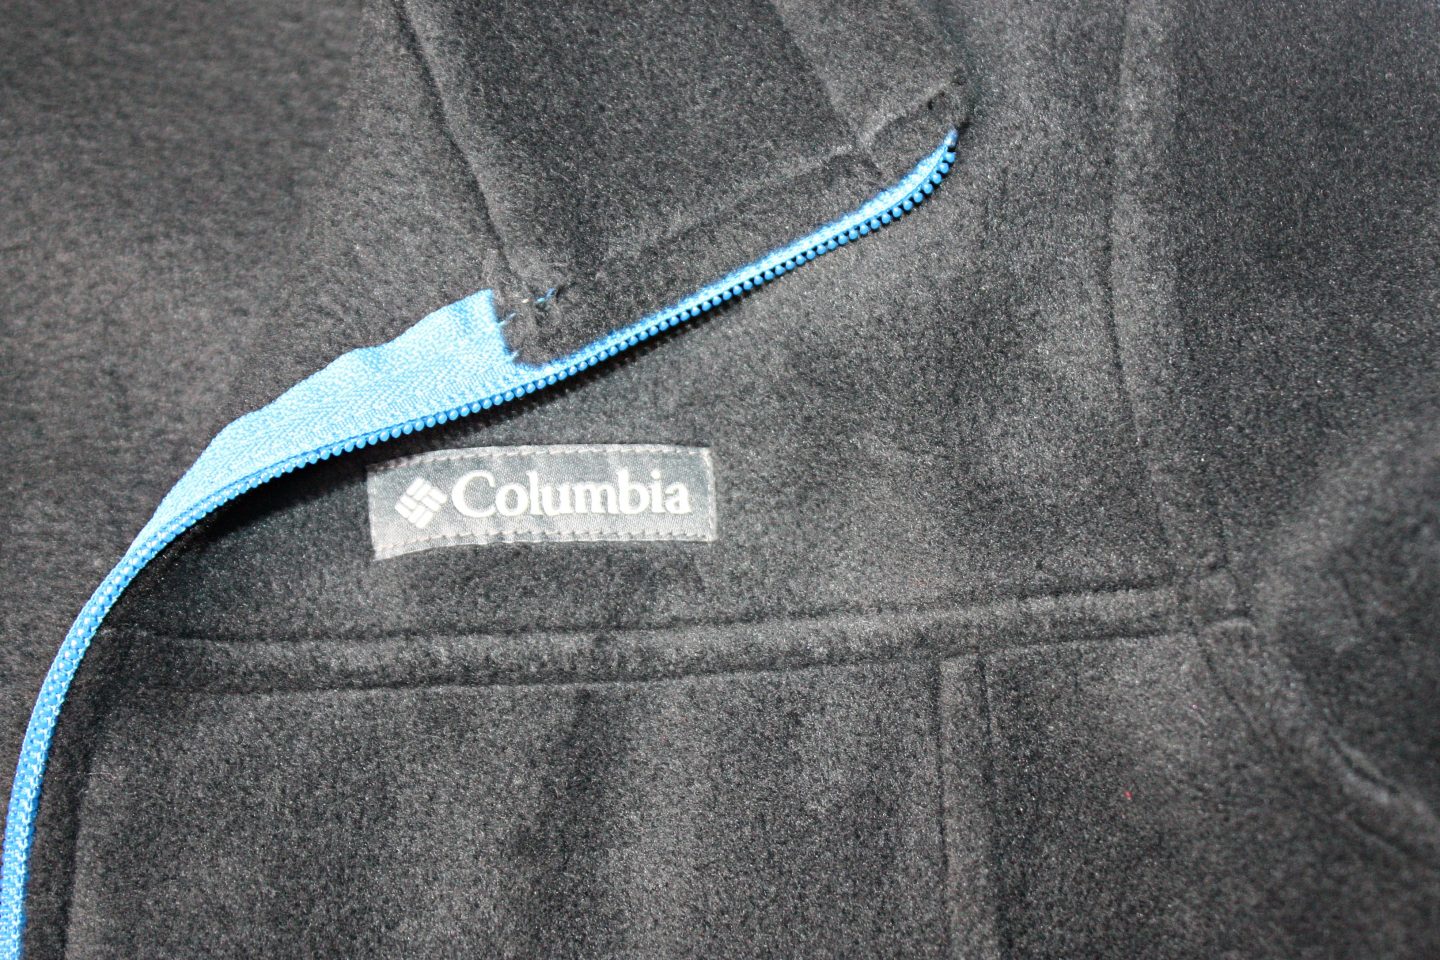 Columbia Slickdeals